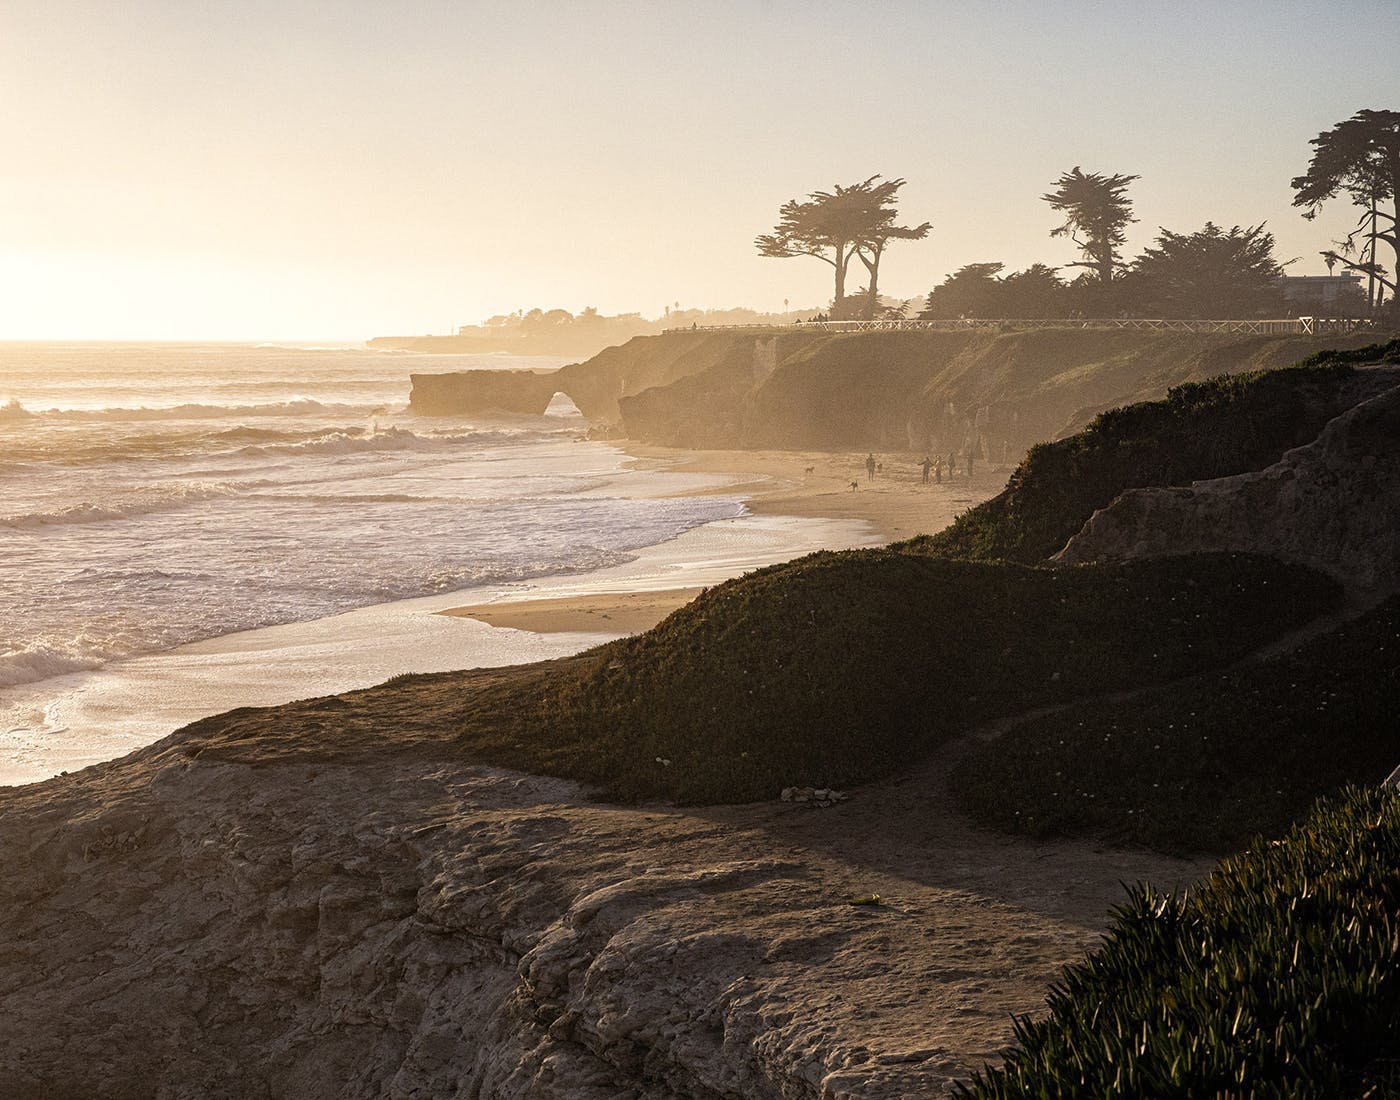 A shot of the Pacific Ocean and the Santa Cruz ridgeline